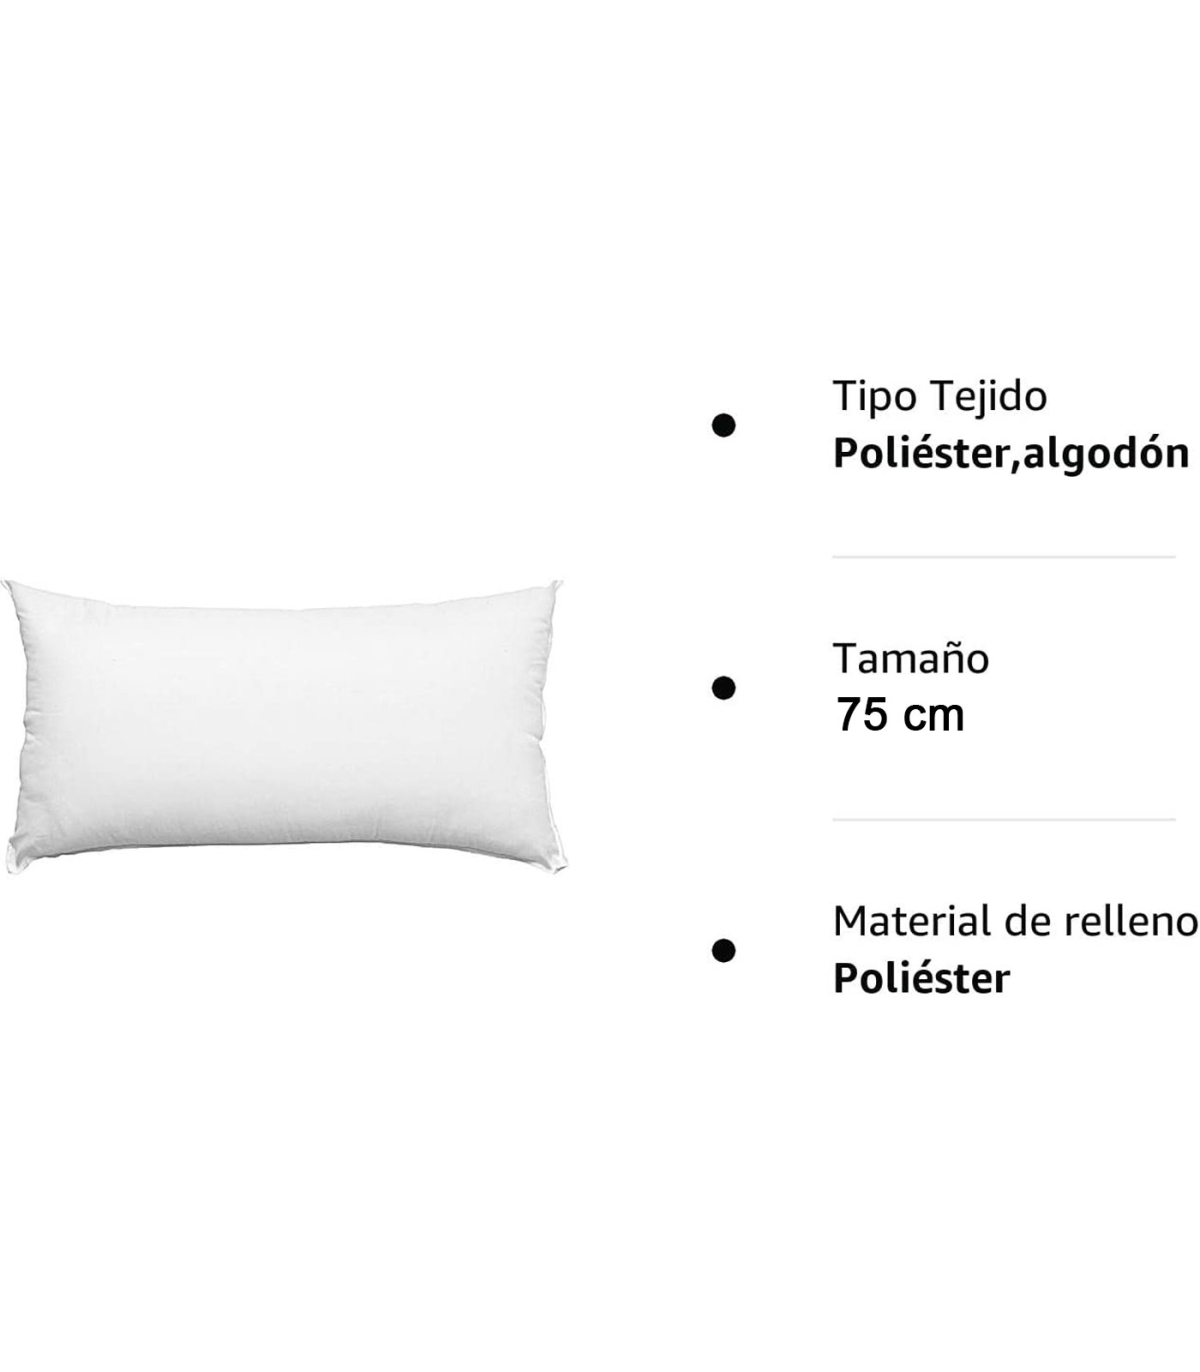 Tradineur - Almohada indeformable Antialérgica - Fabricada en Fibra hueca  Poliéster - Forma rectangular - 75 cm